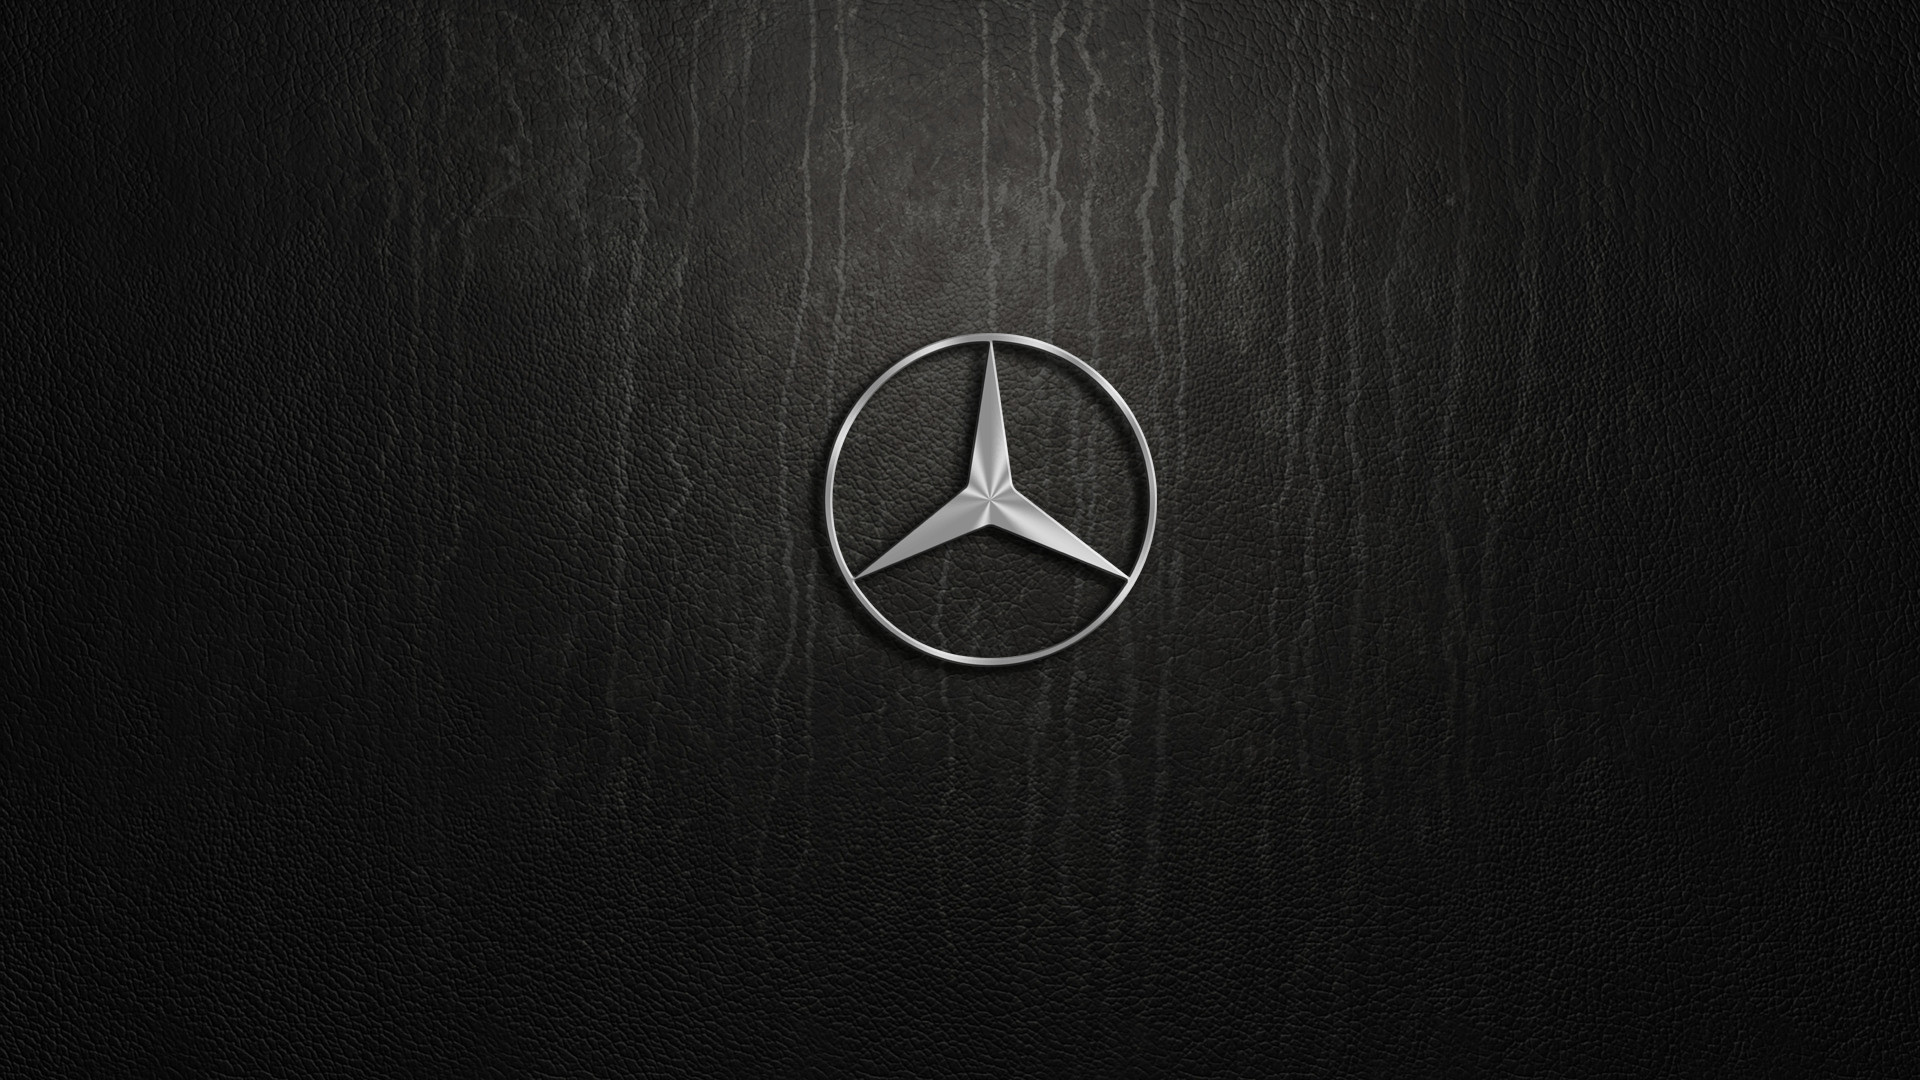 Mercedes Benz Logo Wallpaper For Iphone